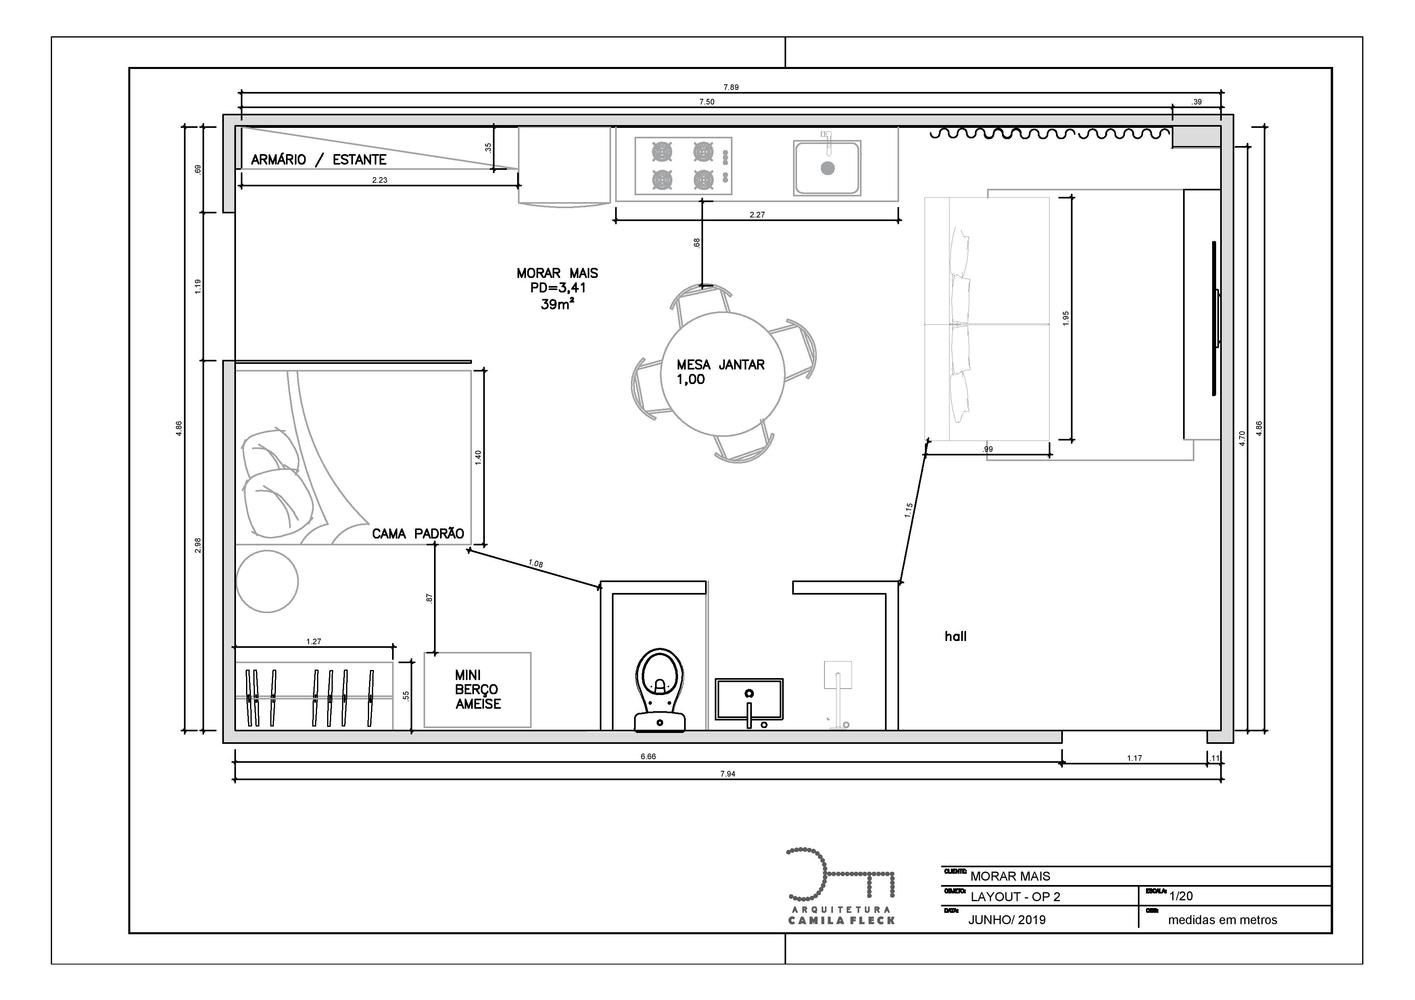 Sơ đồ thiết kế Cores Apartment do Camila Fleck Arquitetura cung cấp.